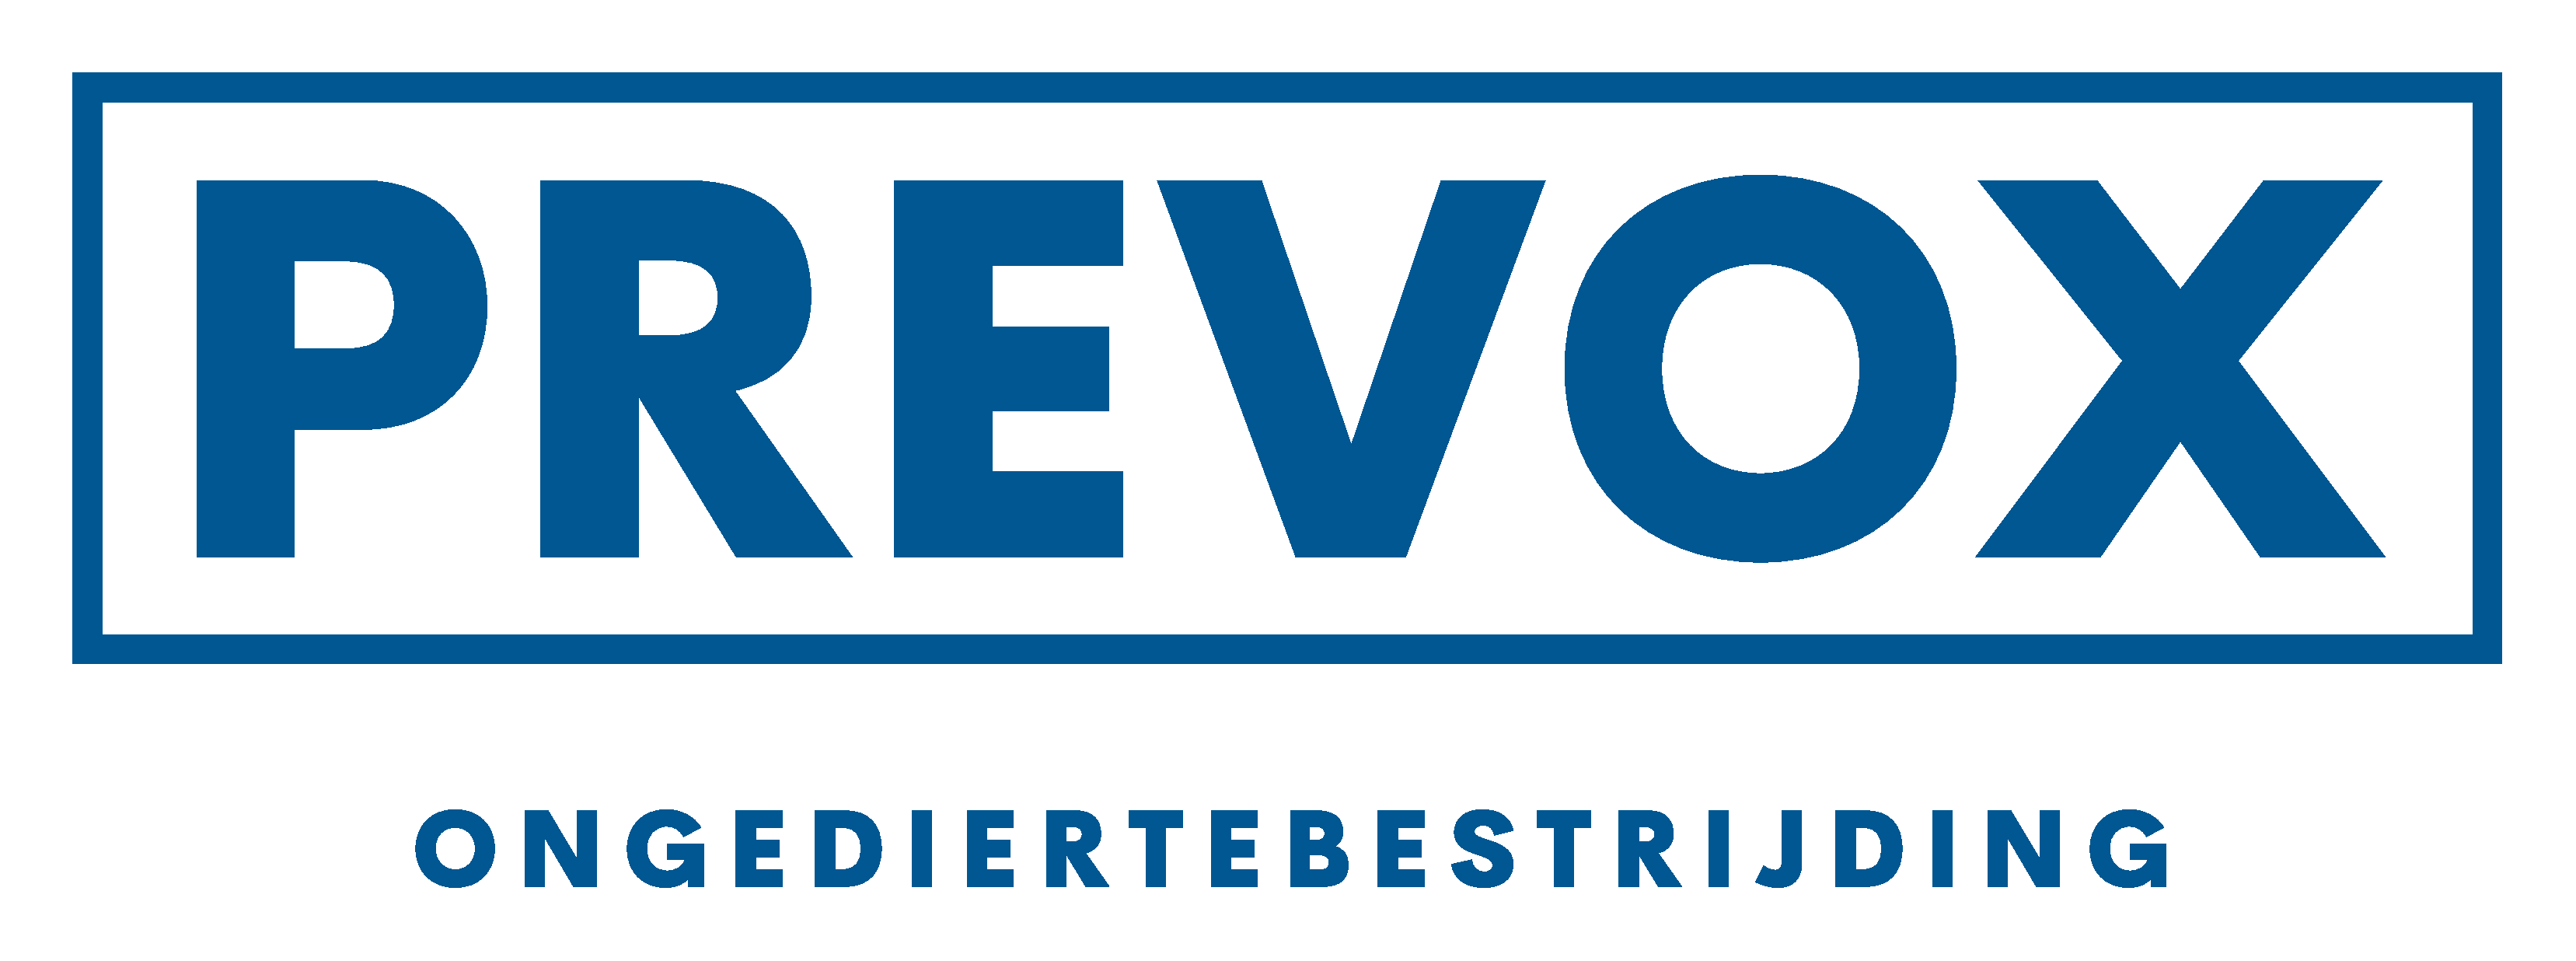 Prevox logo